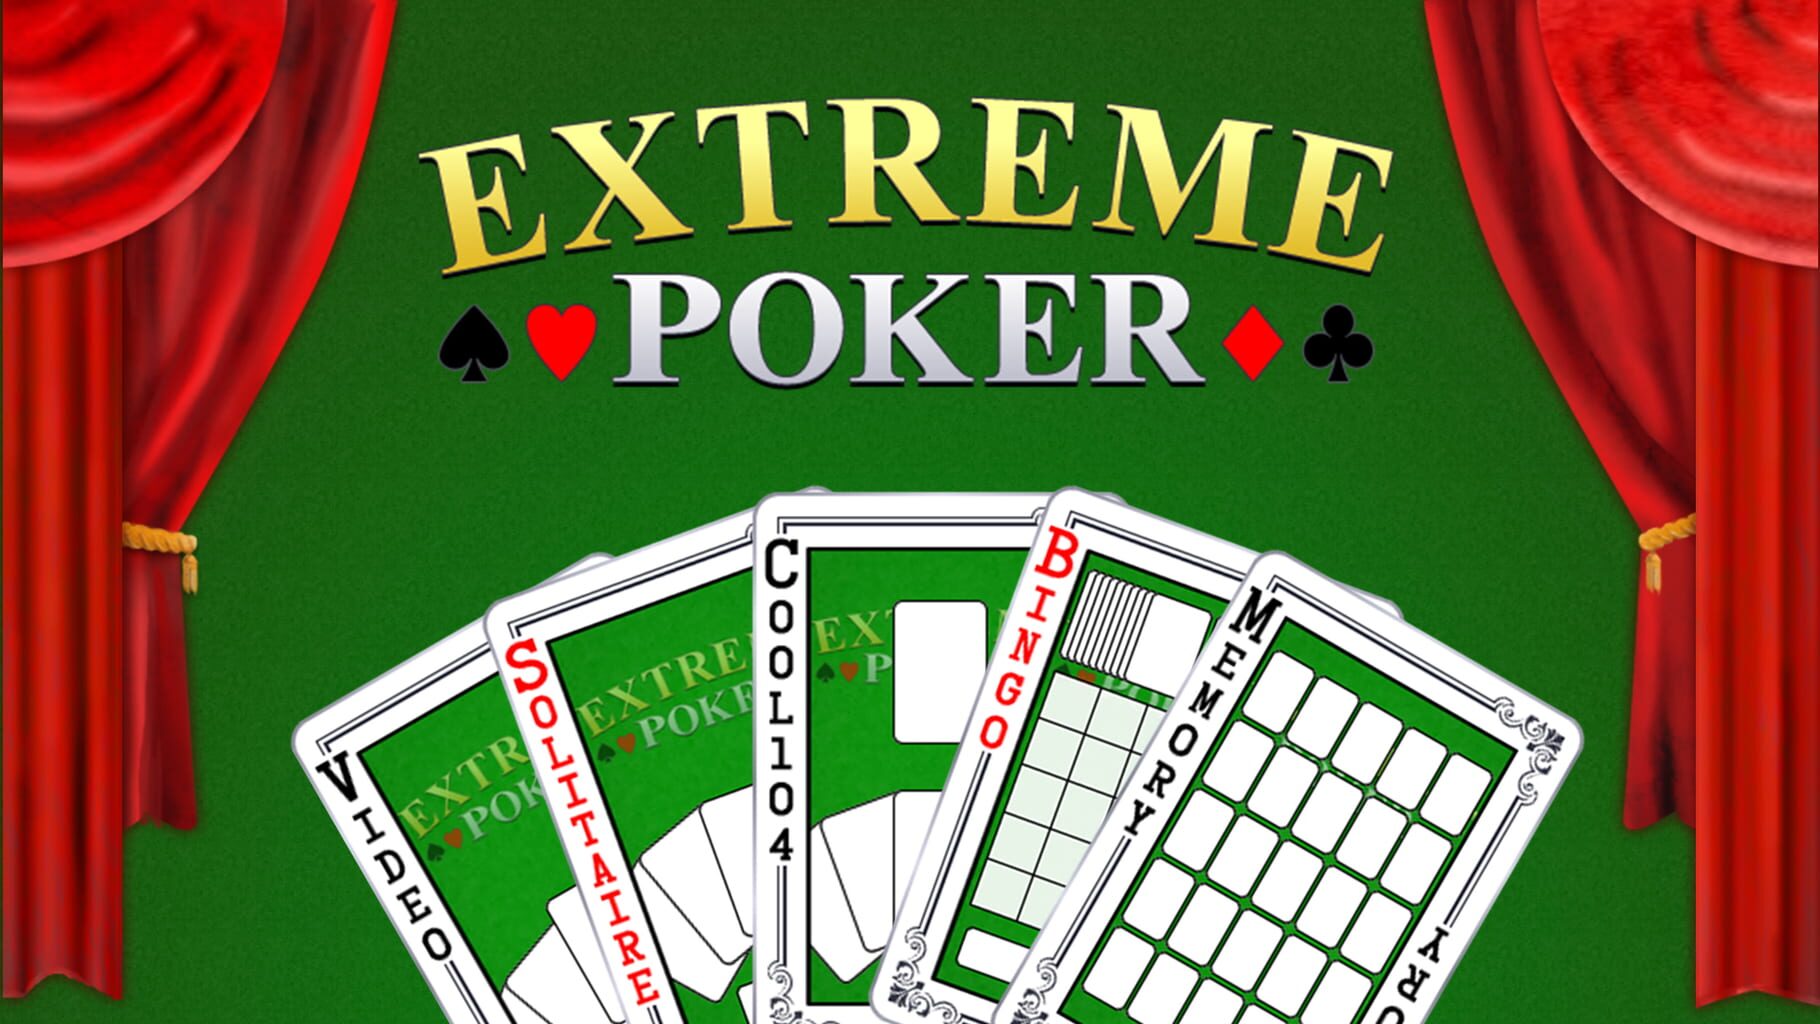 Extreme Poker artwork